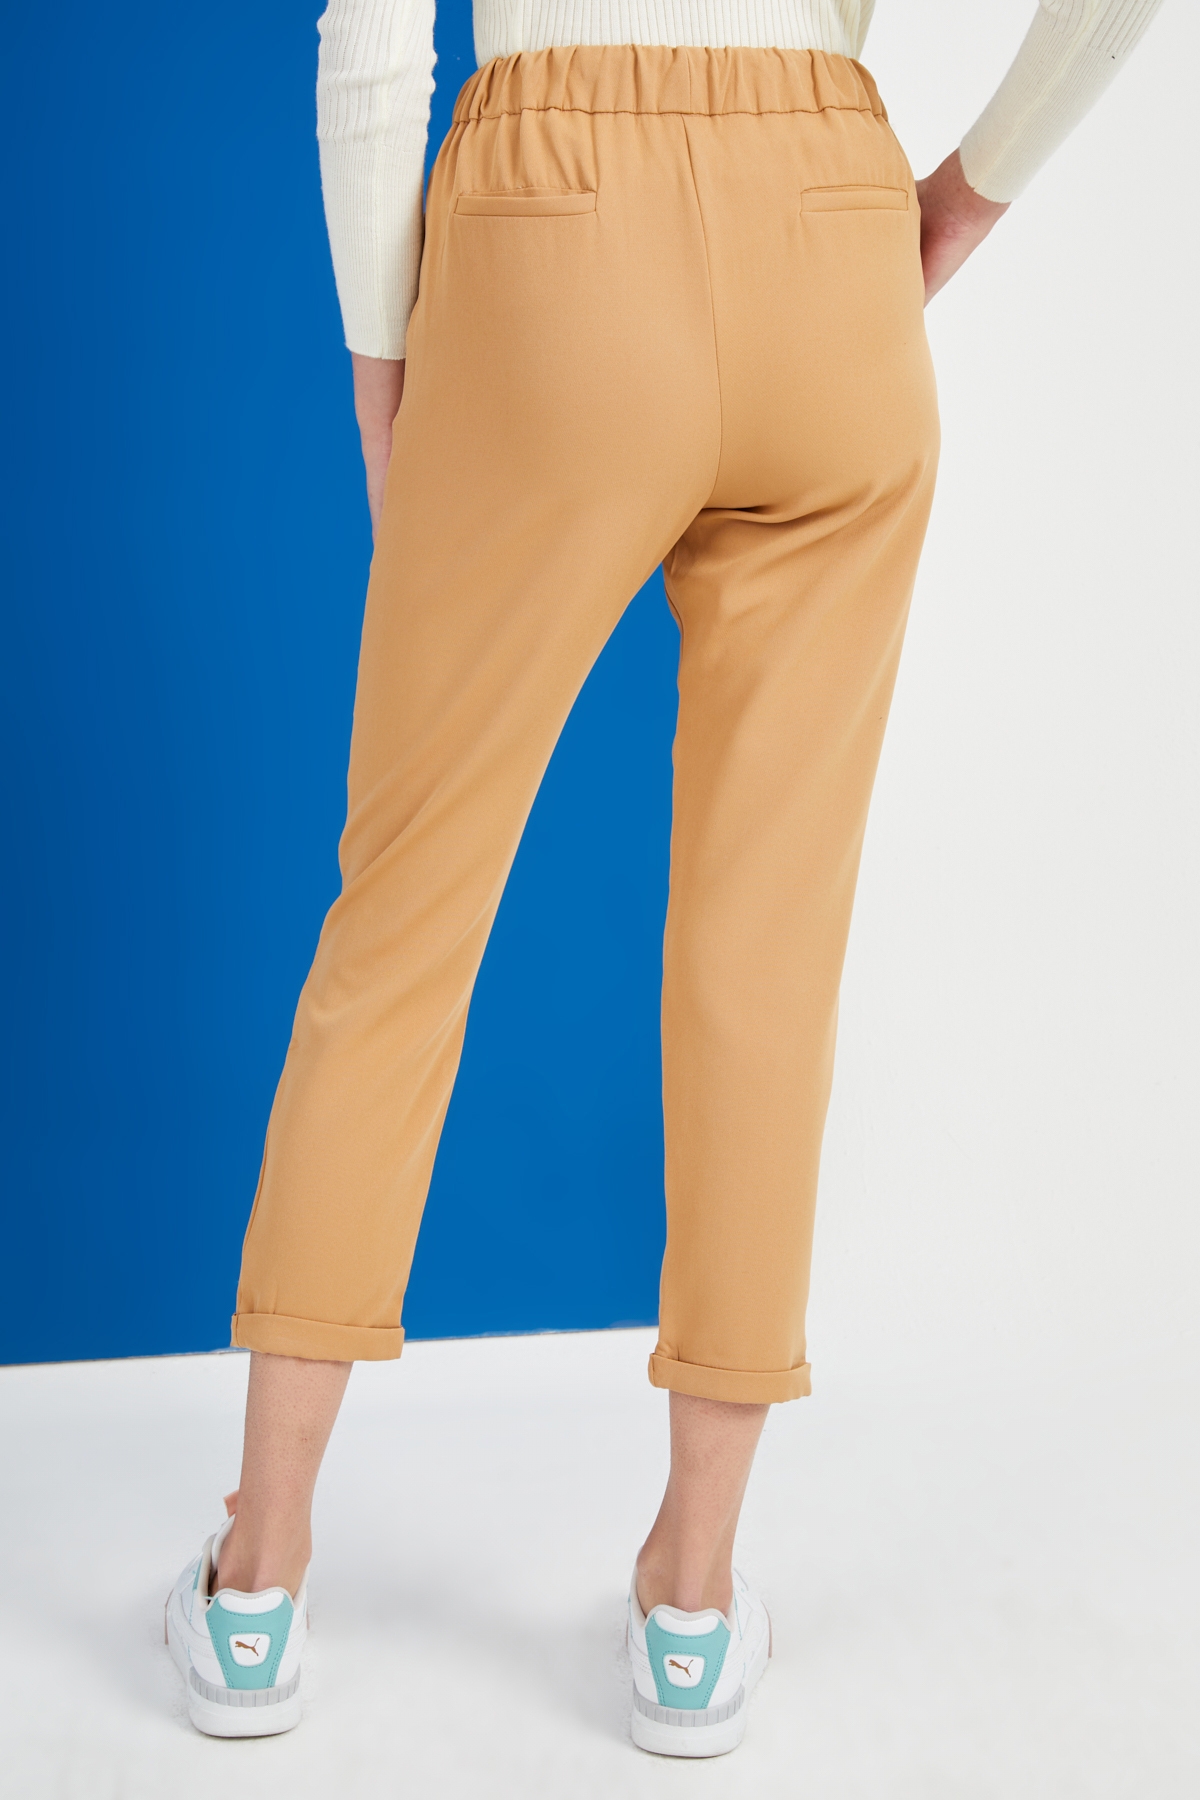 WOMEN FASHION Trousers Slacks Skinny Bershka slacks discount 94% Yellow 36                  EU slim 